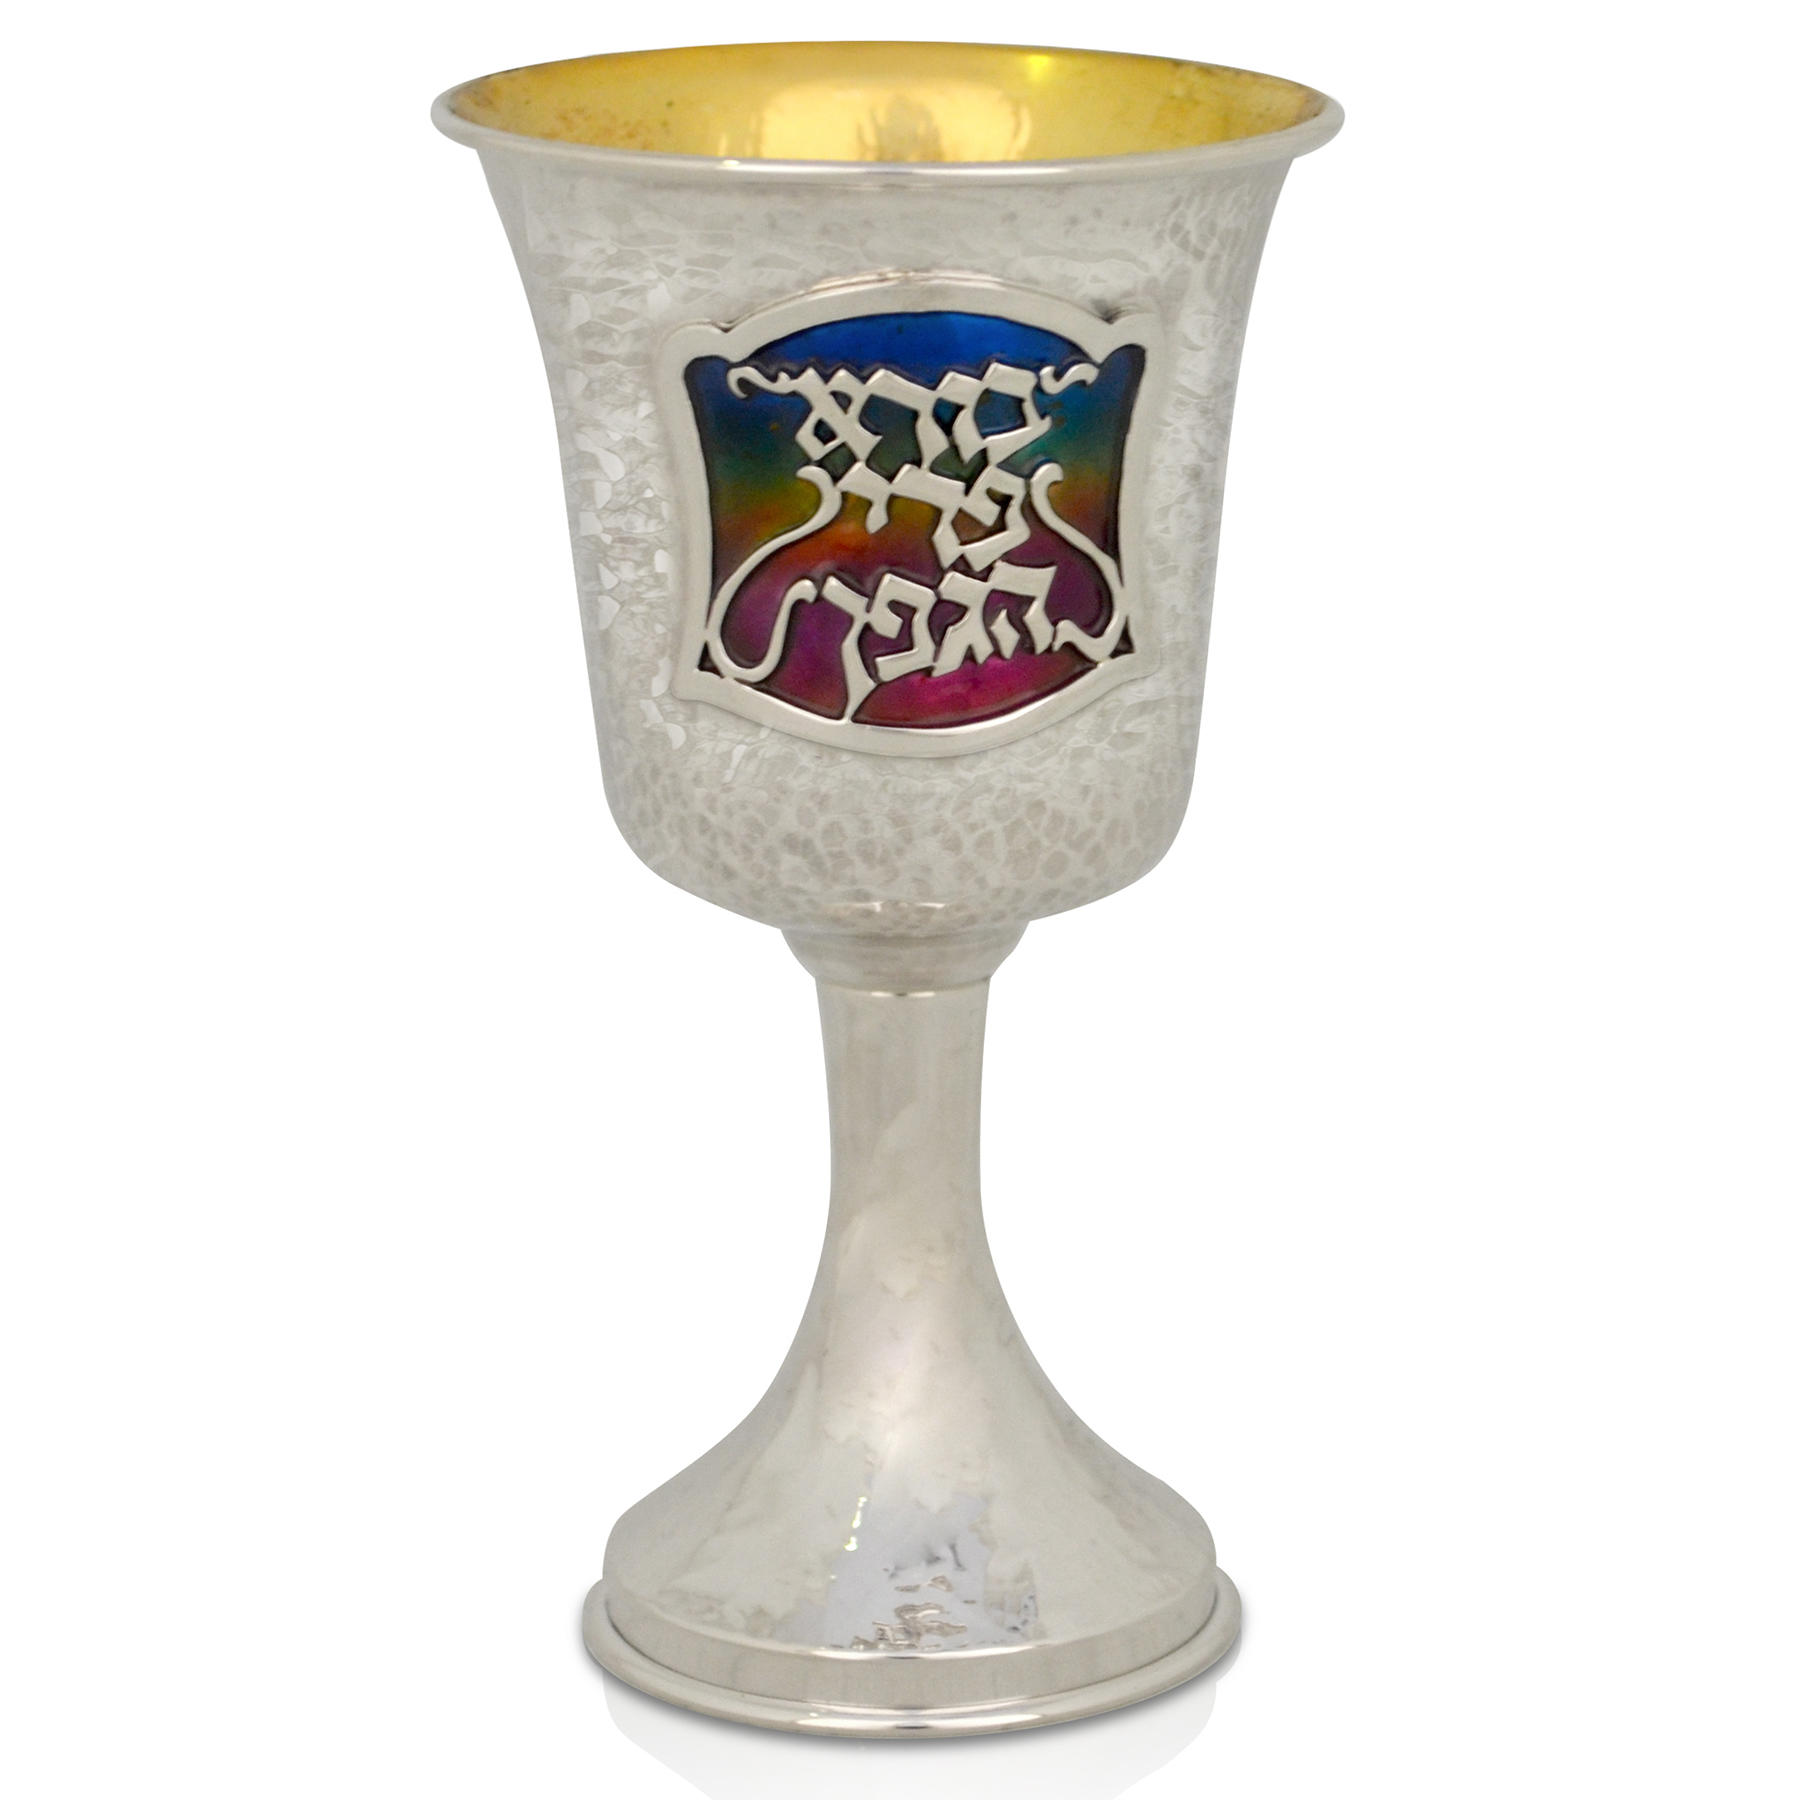 Image result for hebrew blessing over wine